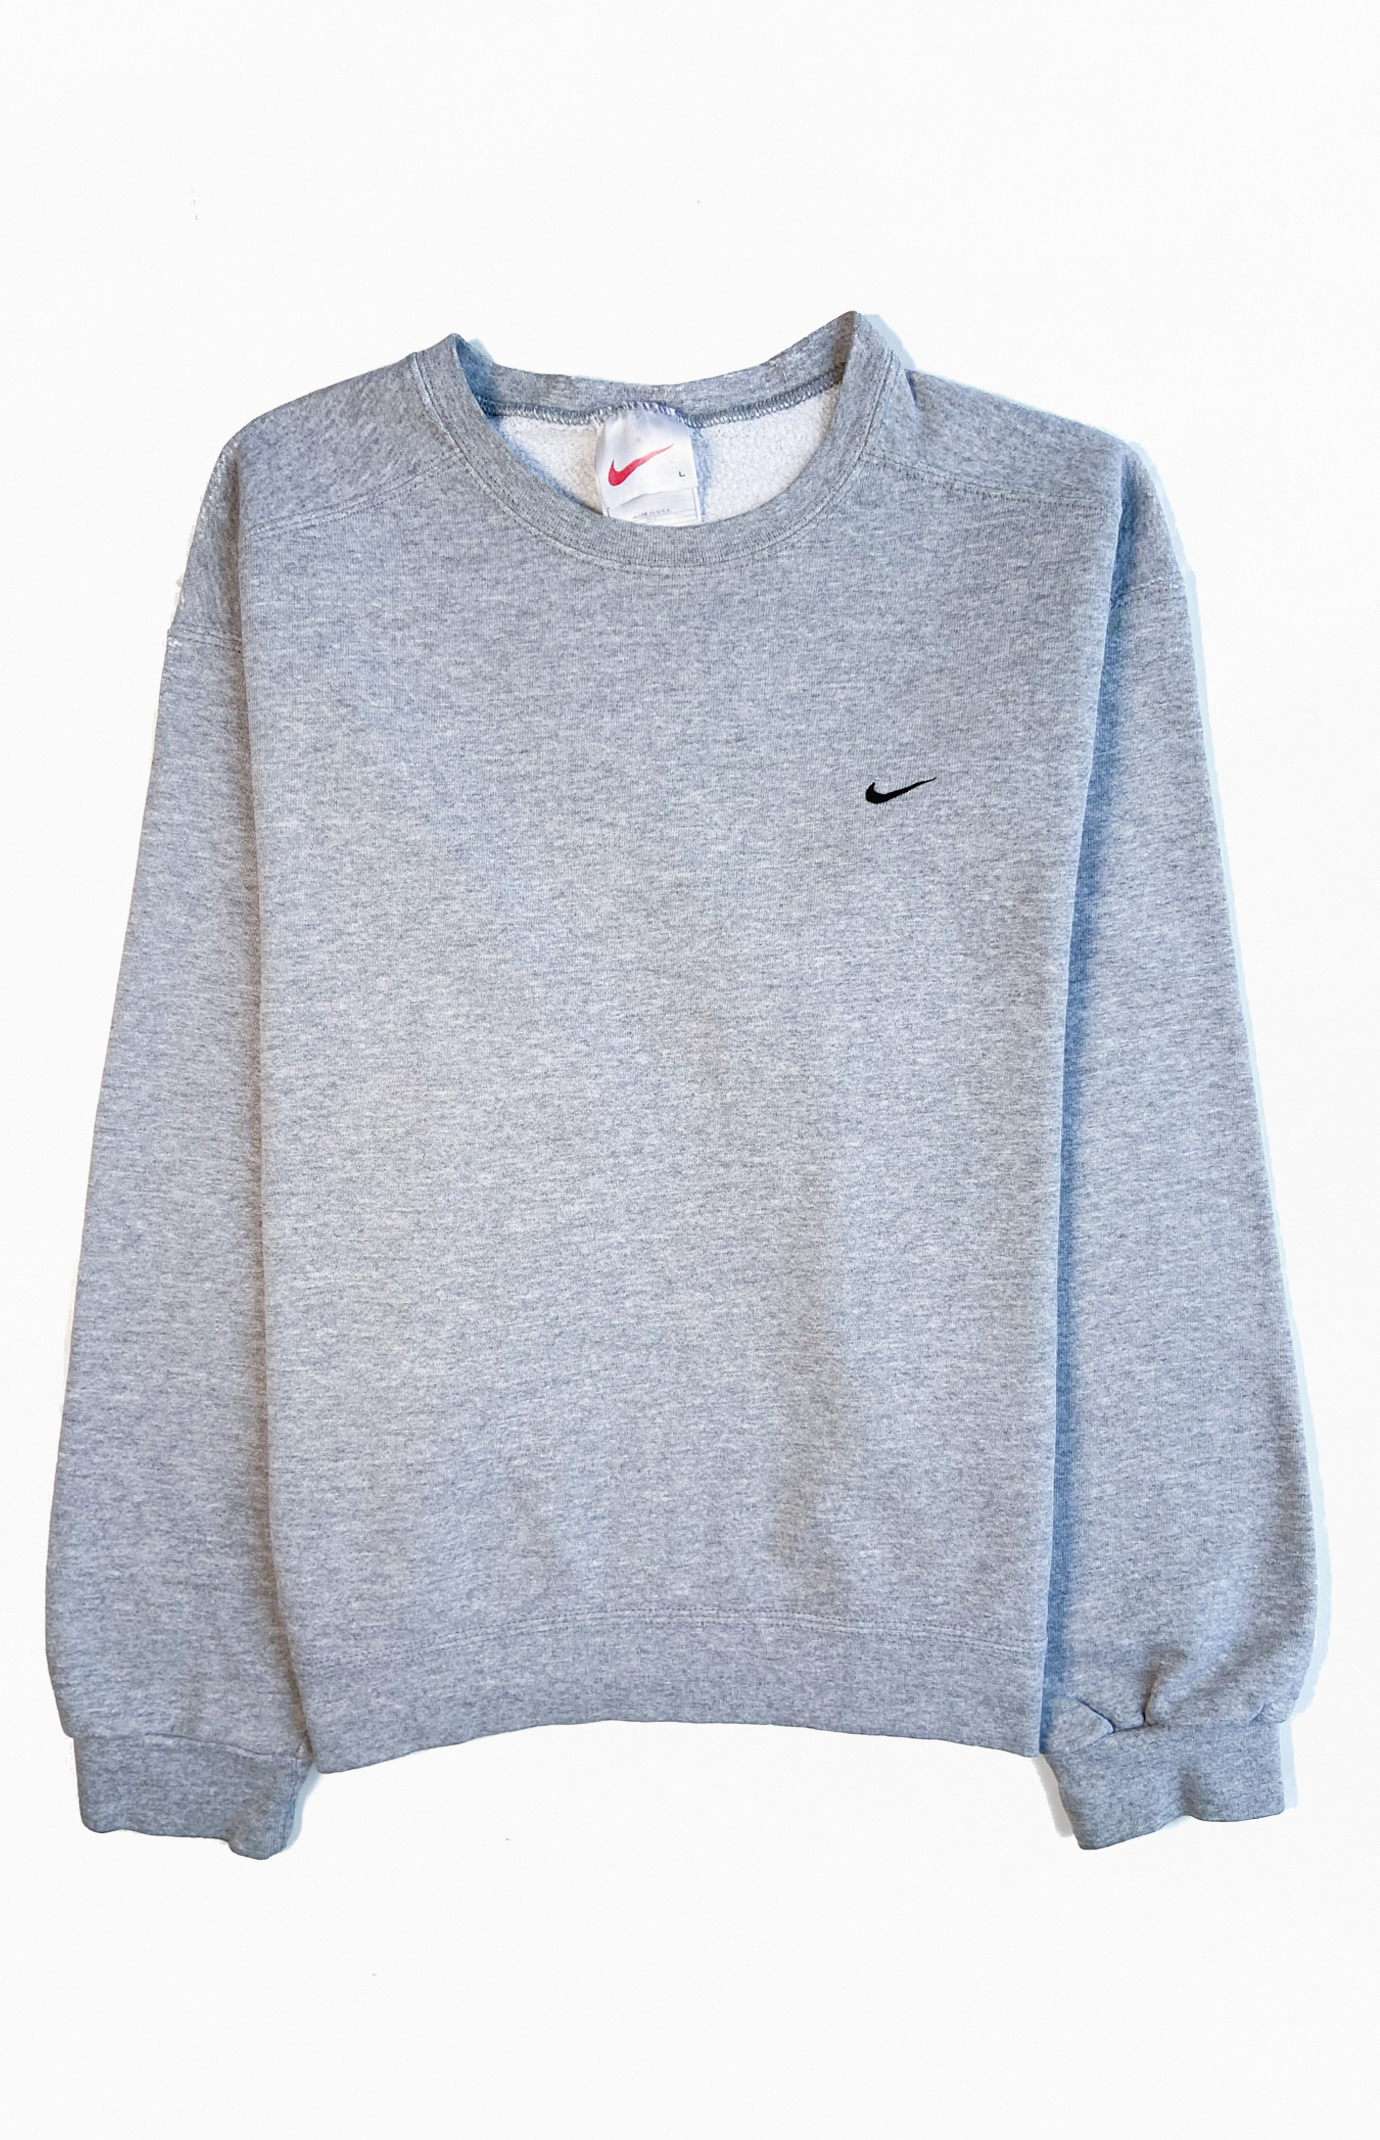 GOAT Vintage '90s Nike Sweatshirt | PacSun